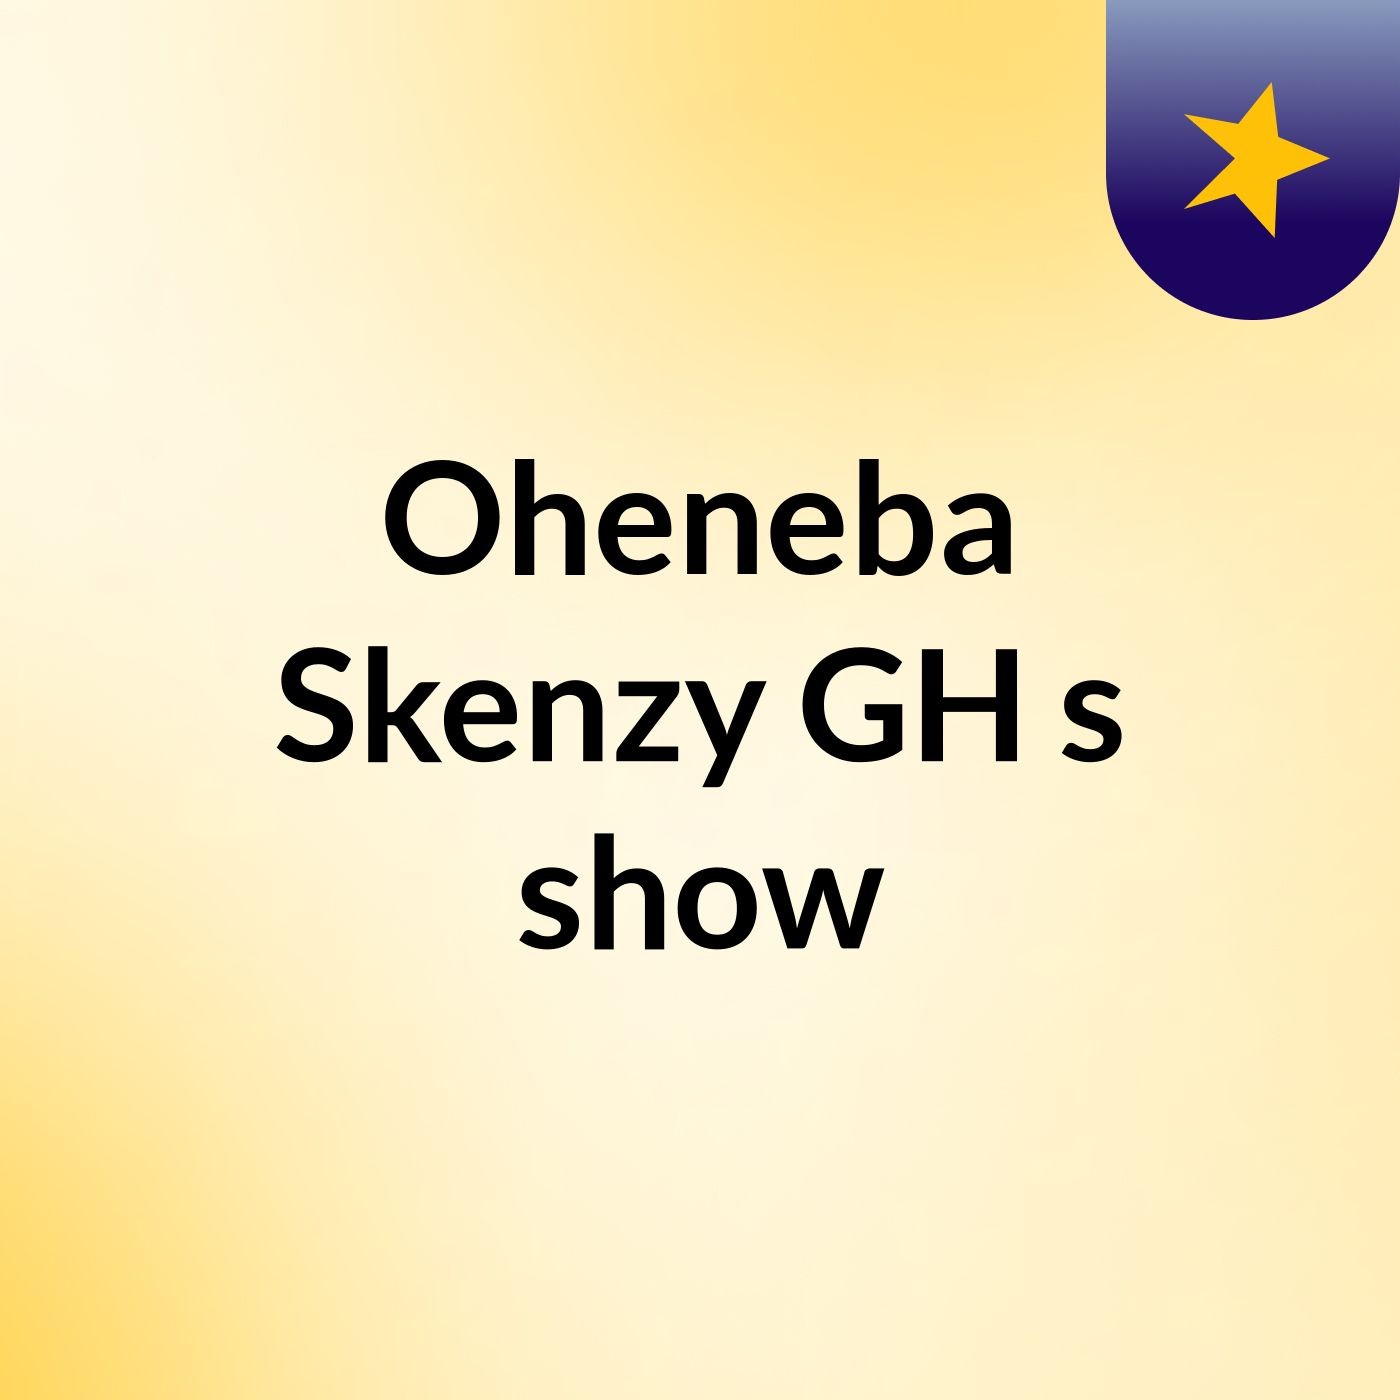 Oheneba Skenzy GH's show